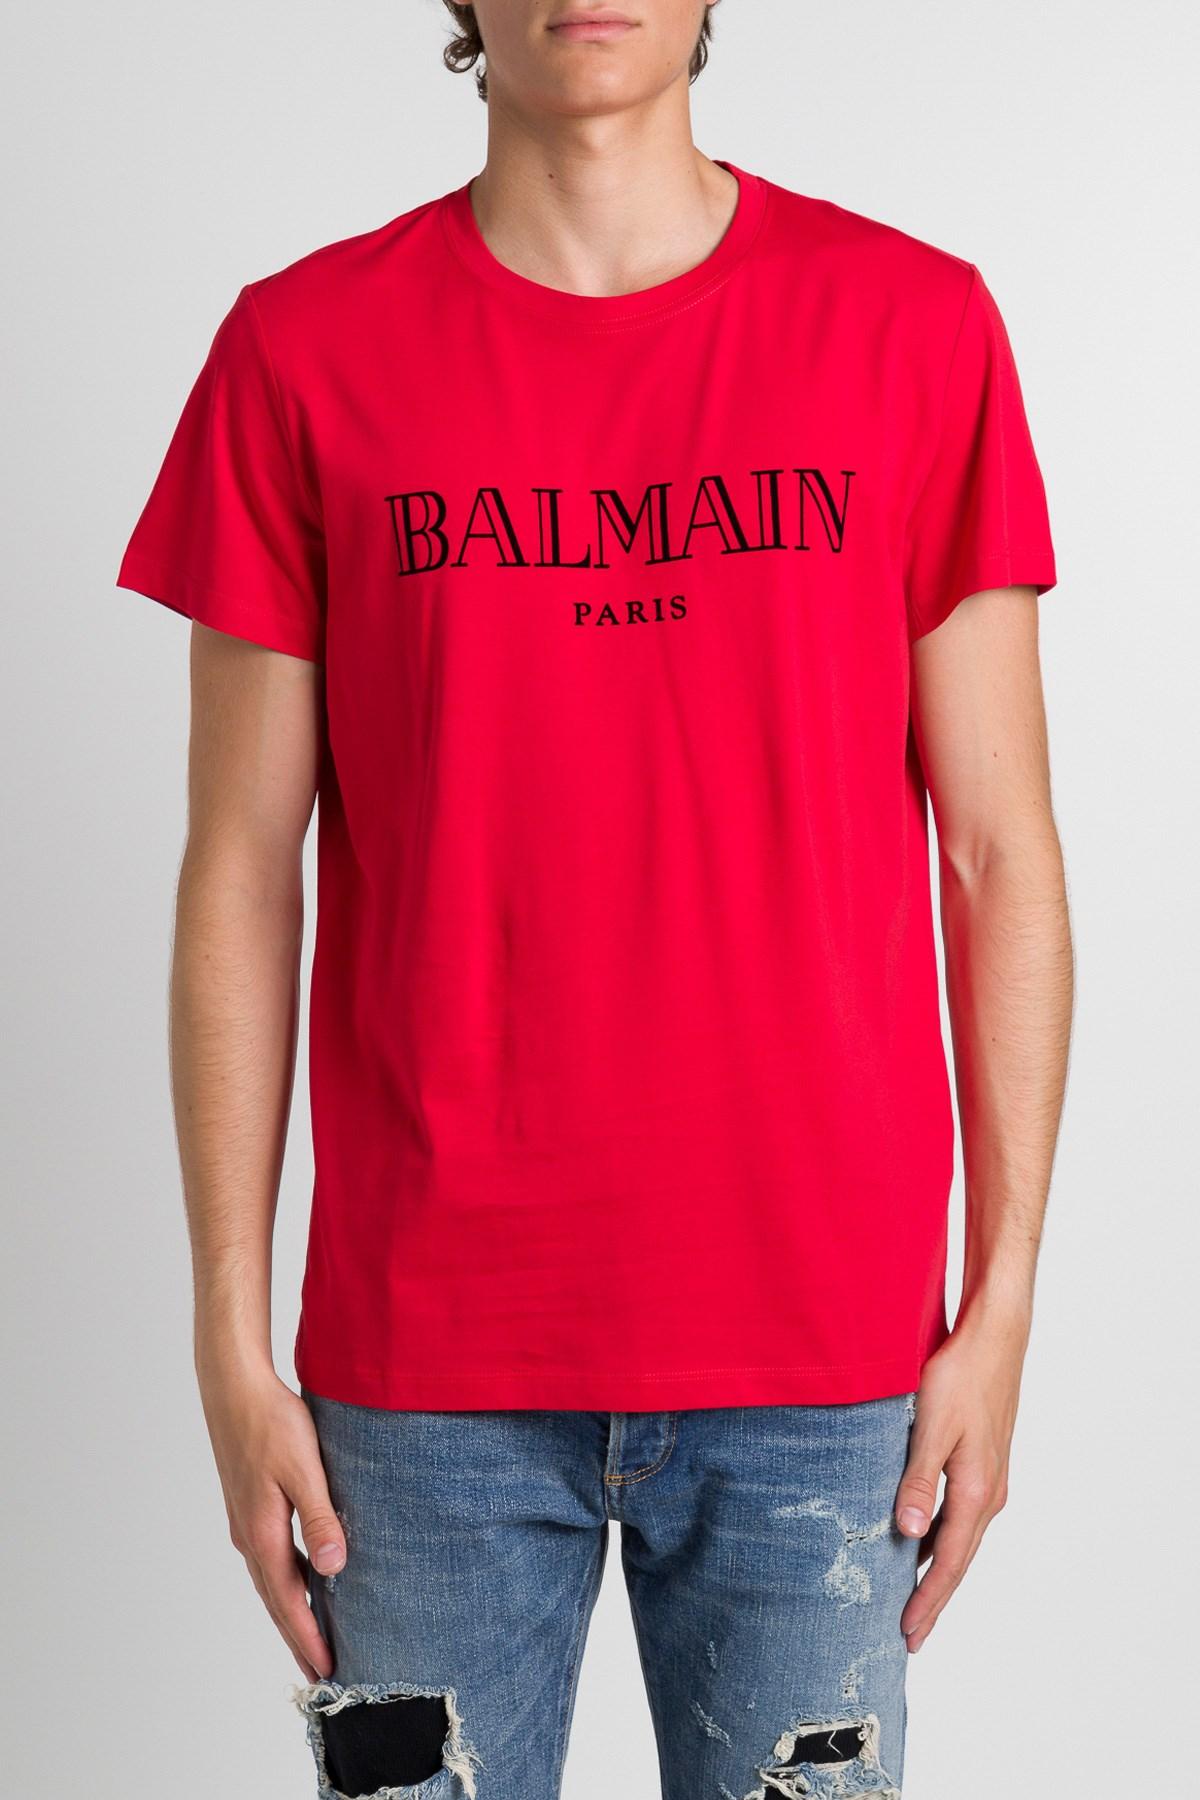 Balmain Cotton ' Logo' Print T-shirt in Red for Men - Lyst